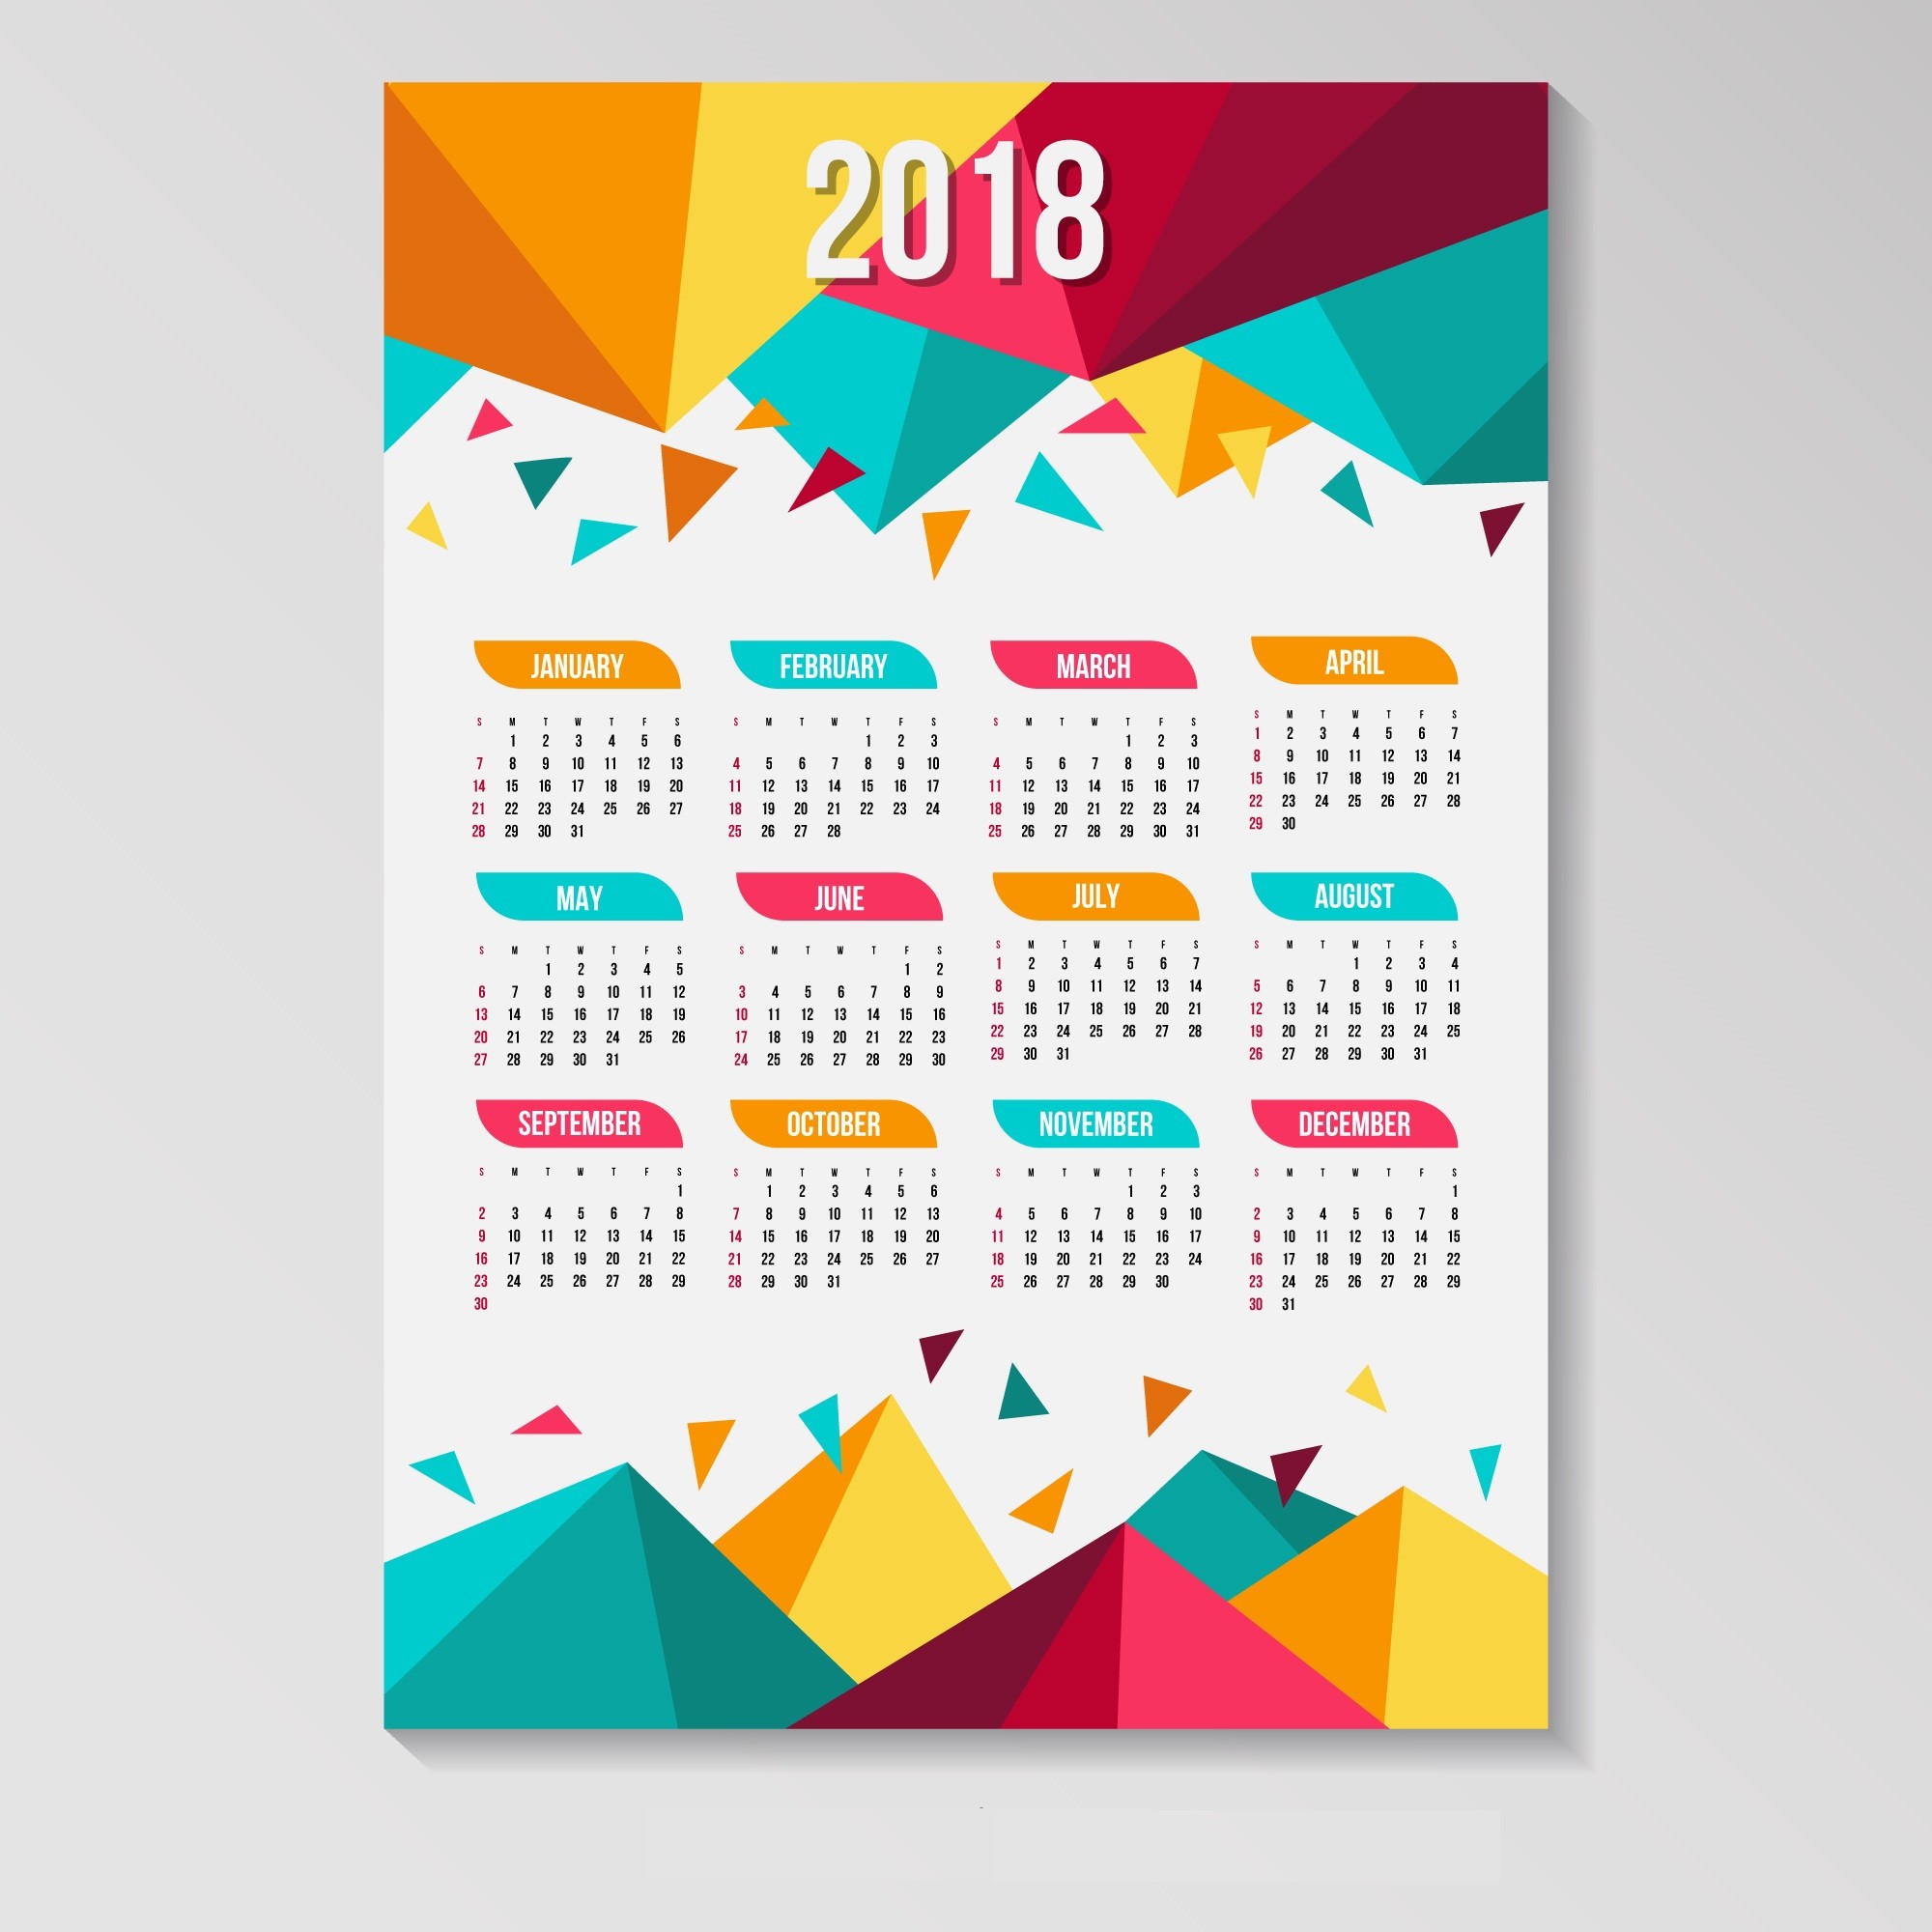 2018 Calendar Wallpaper (65+ images)